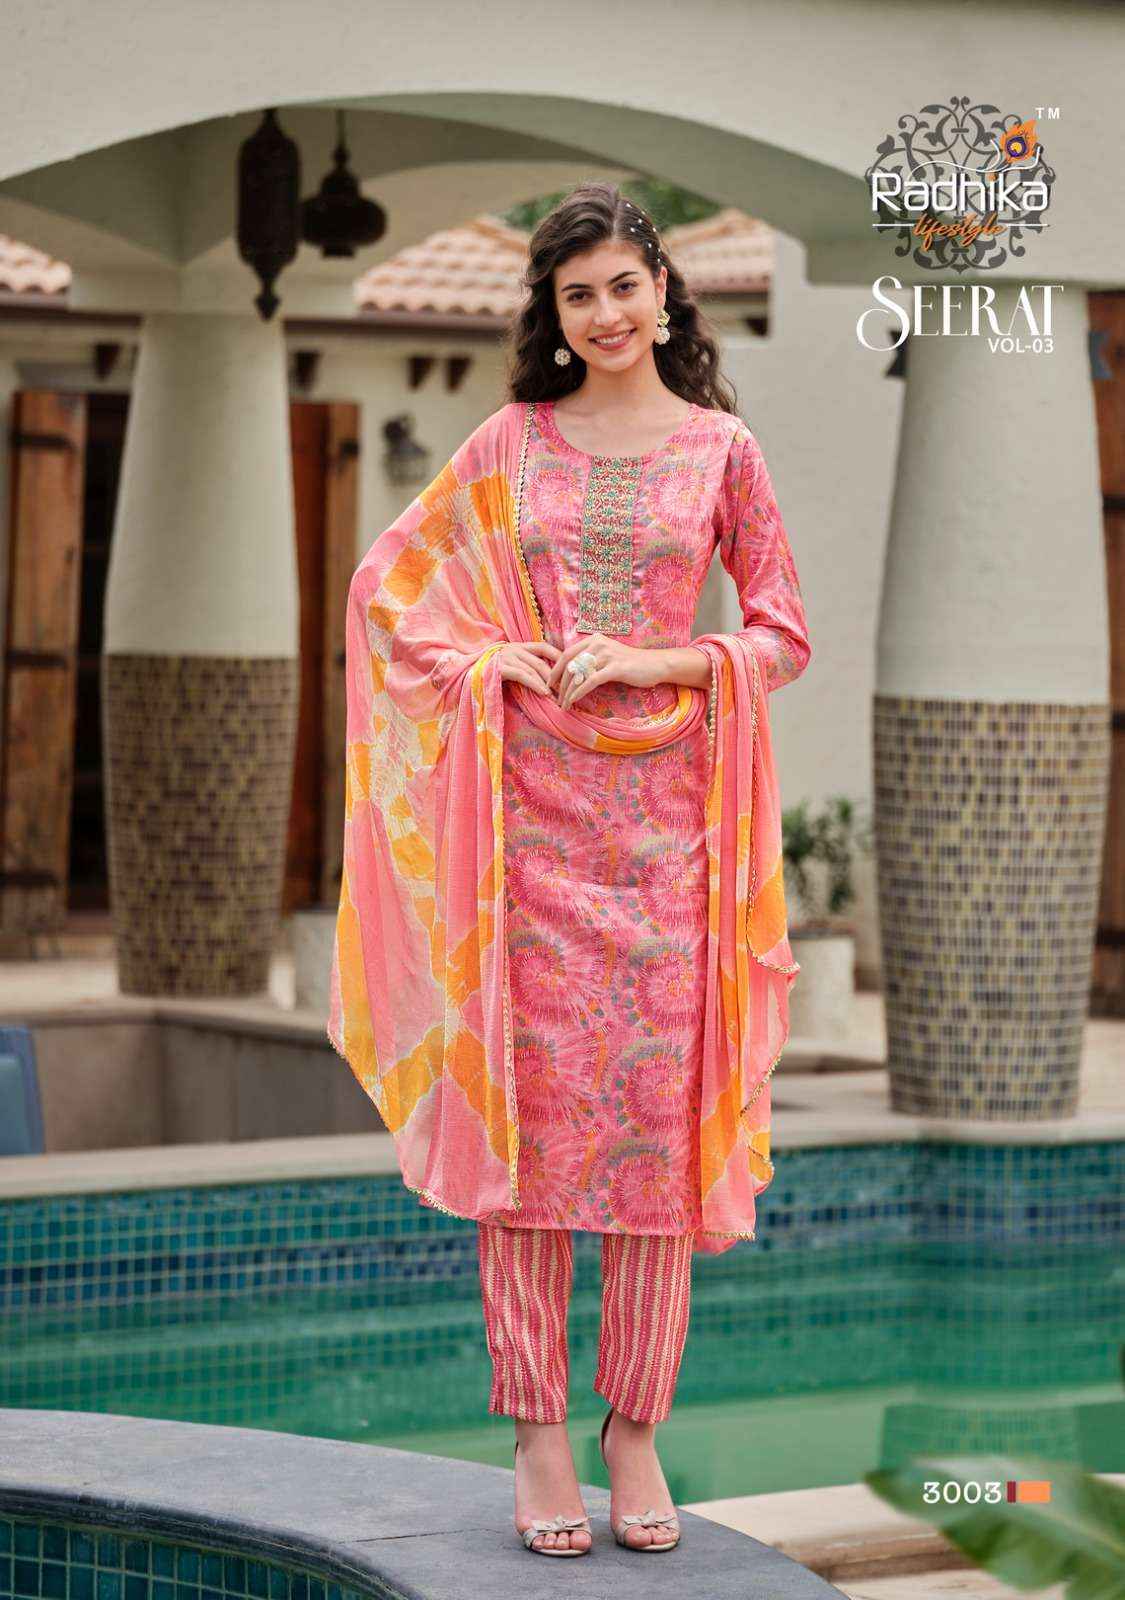 radhika lifestyle seerat vol-3 3001-3008 series trendy designer kurtis catalogue online supplier surat